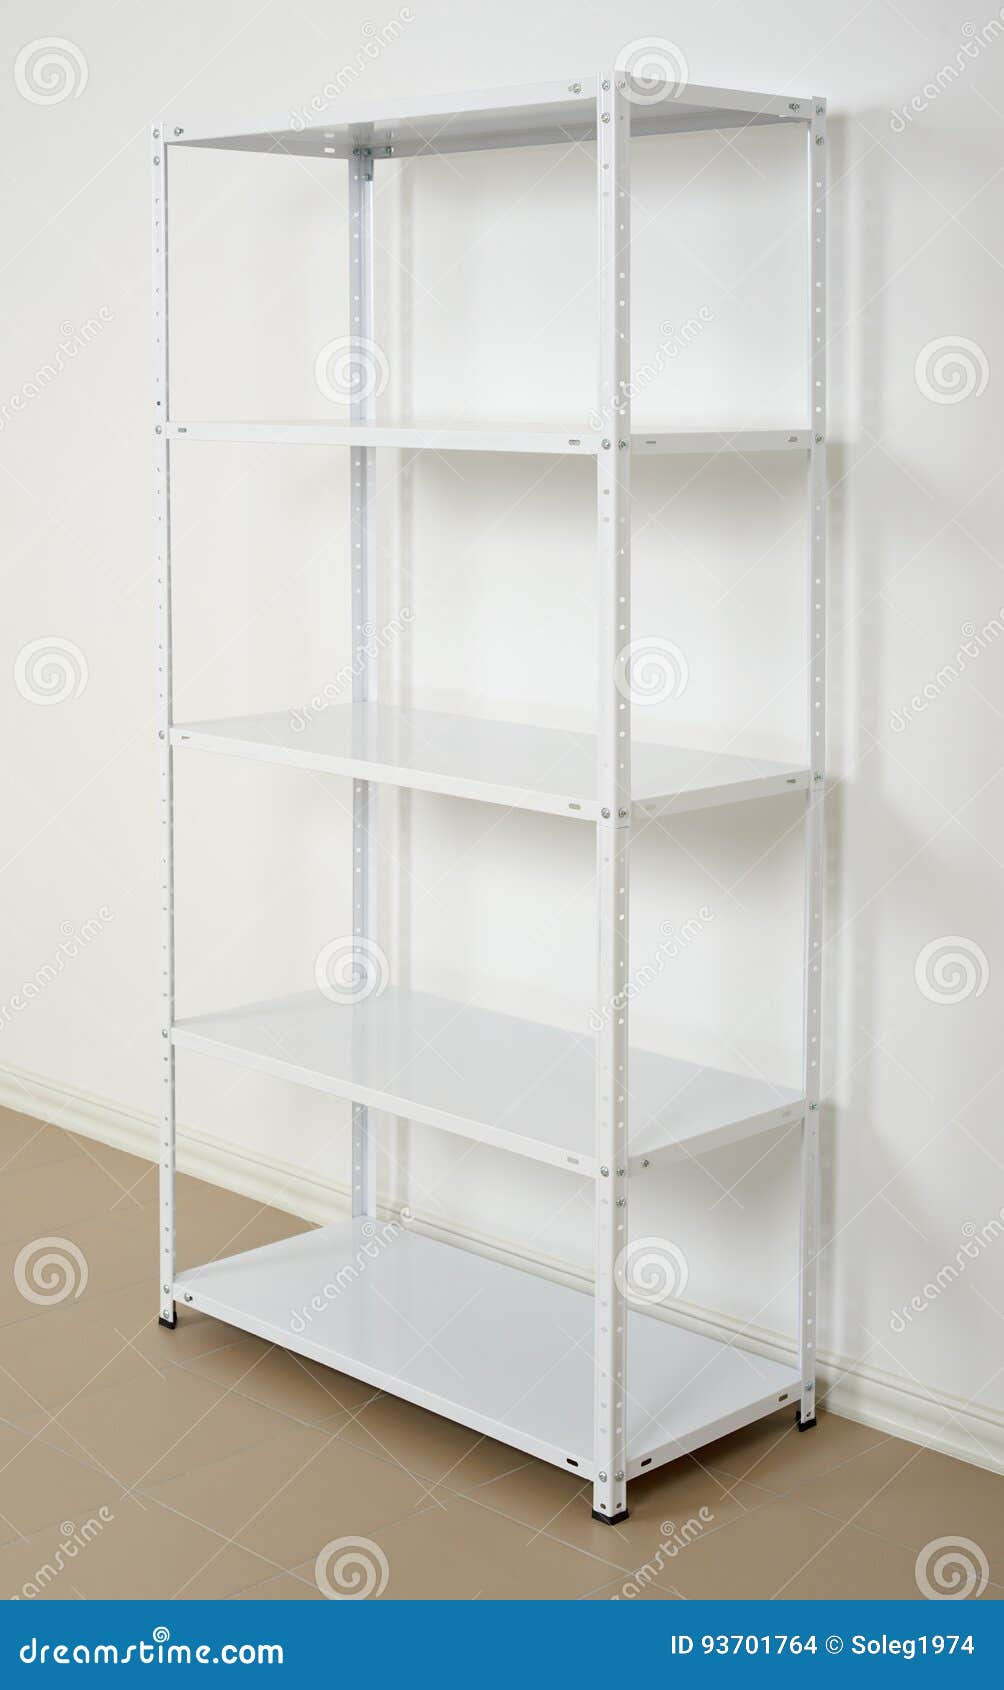 White Metal Rack Near The Wall, Empty Shelves Stock Photo ...